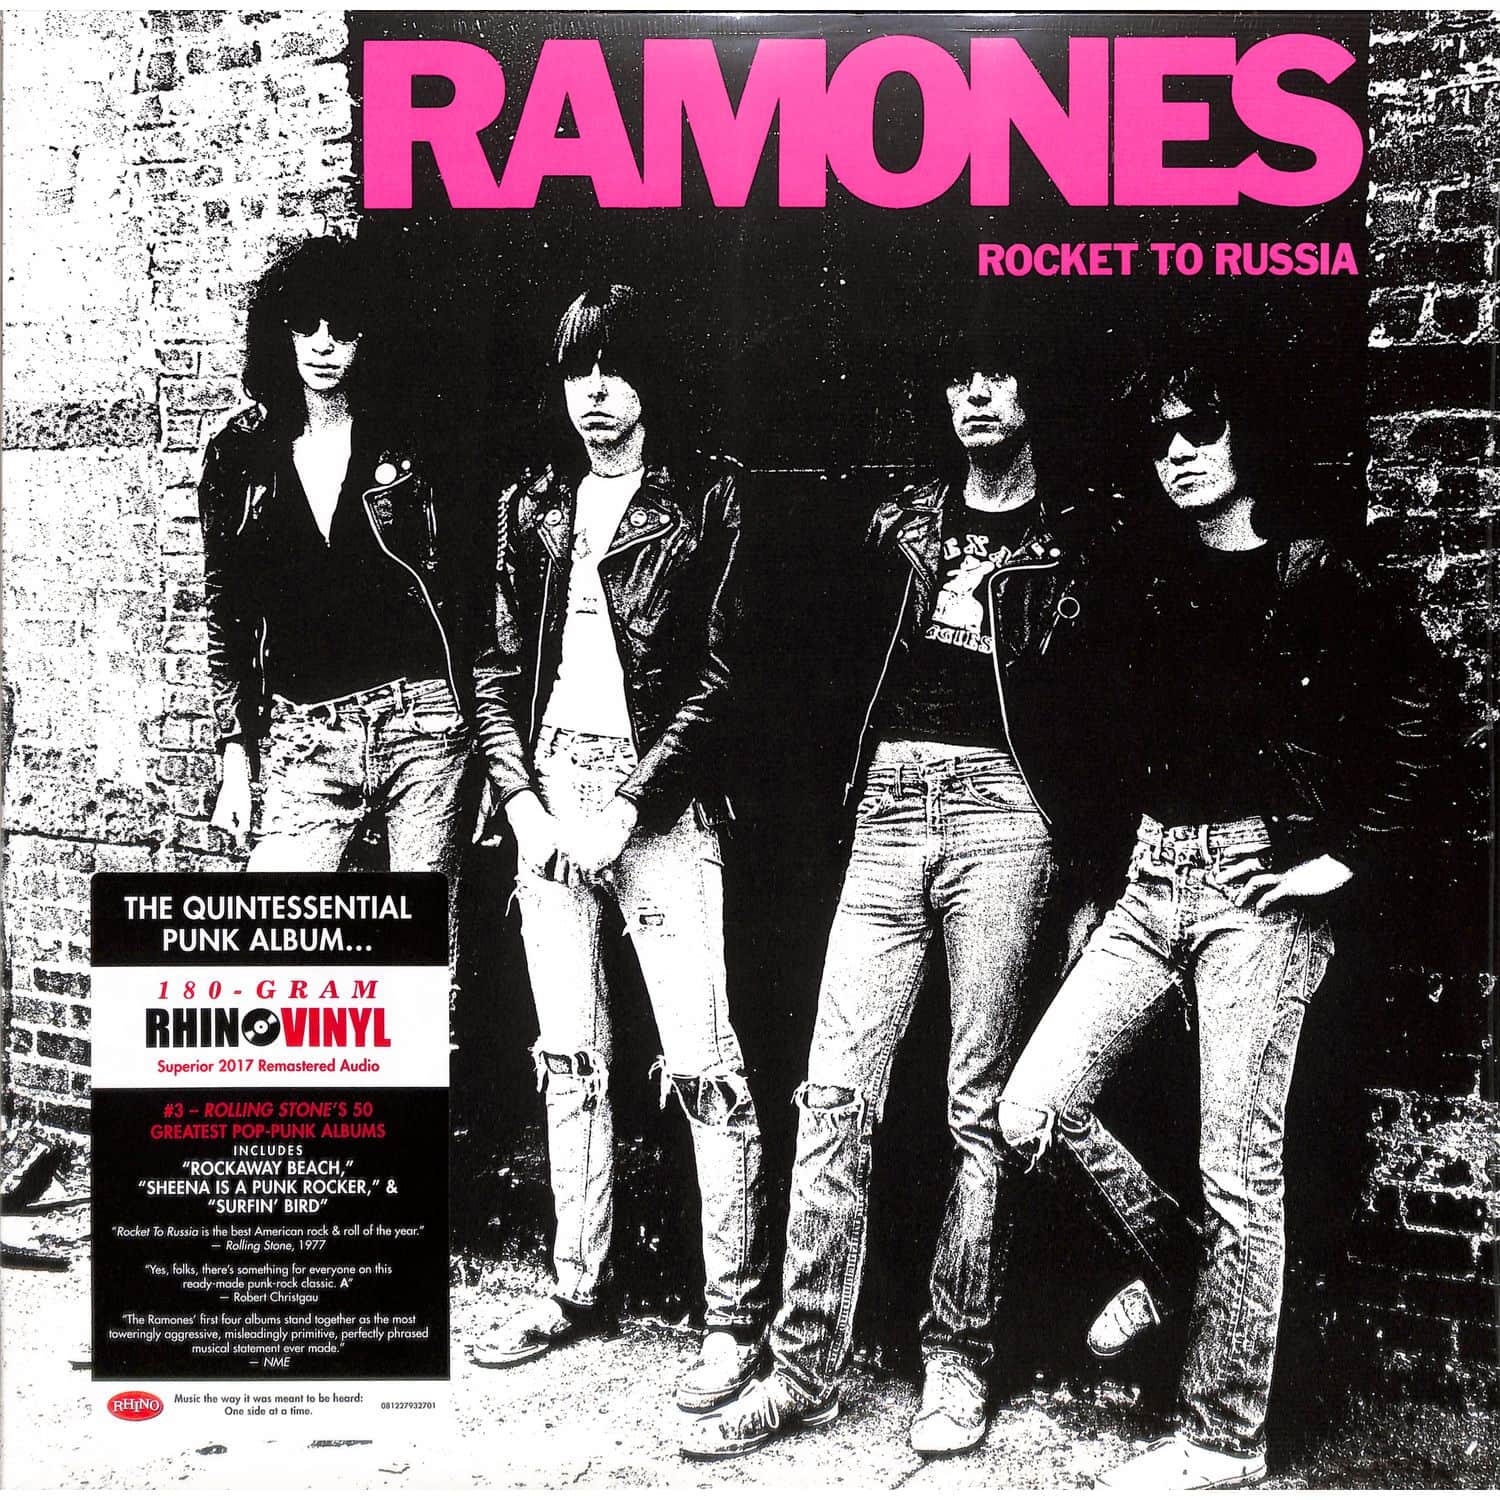 Ramones - ROCKET TO RUSSIA 